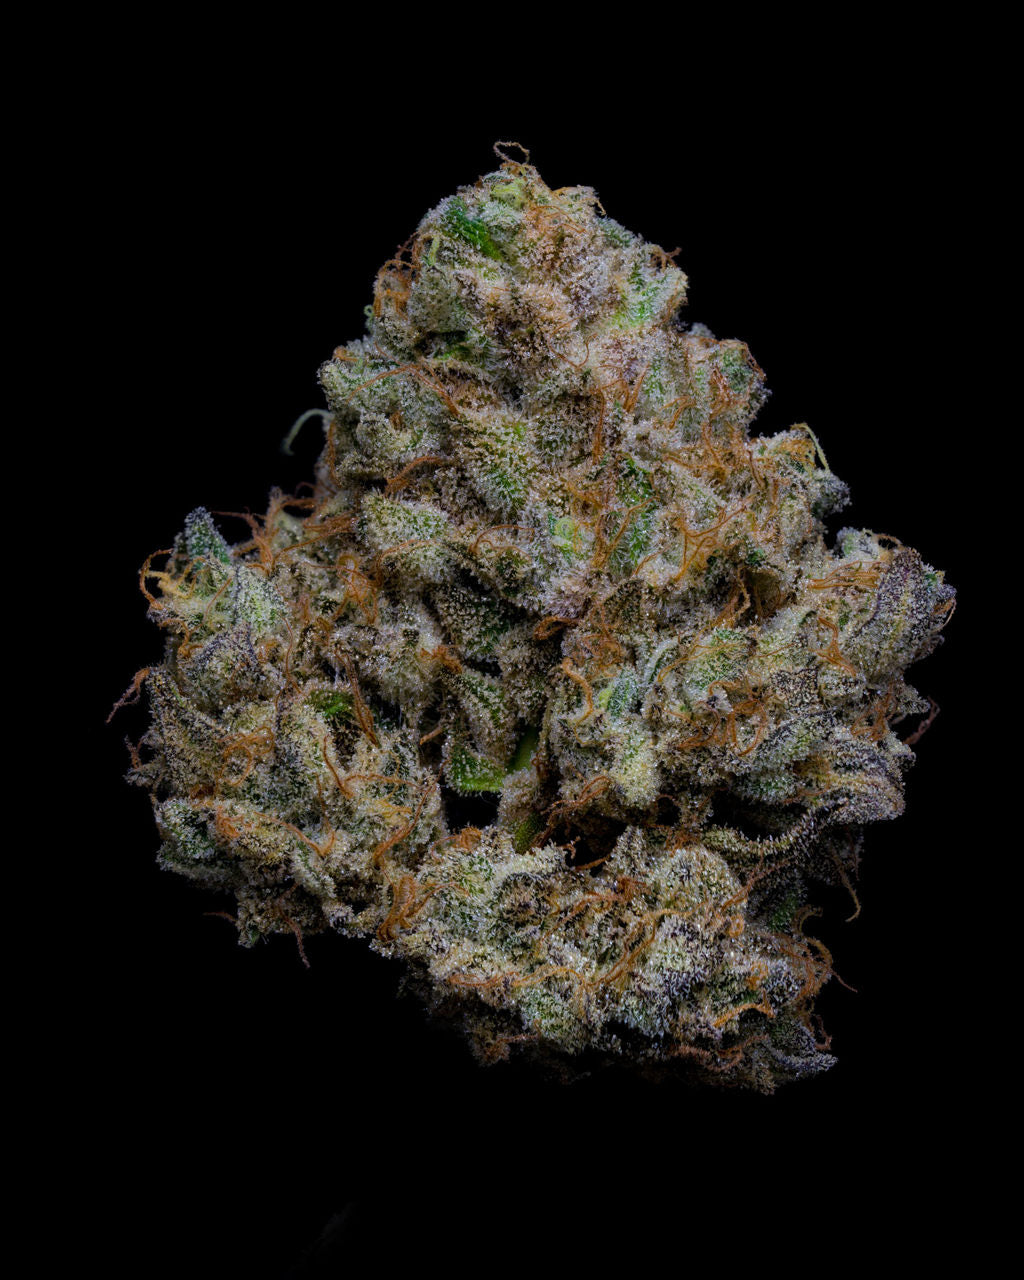 STIIIZY King Louis XIII - Mango Flavor Premium THC POD .5G - Cannabis  Kingdom